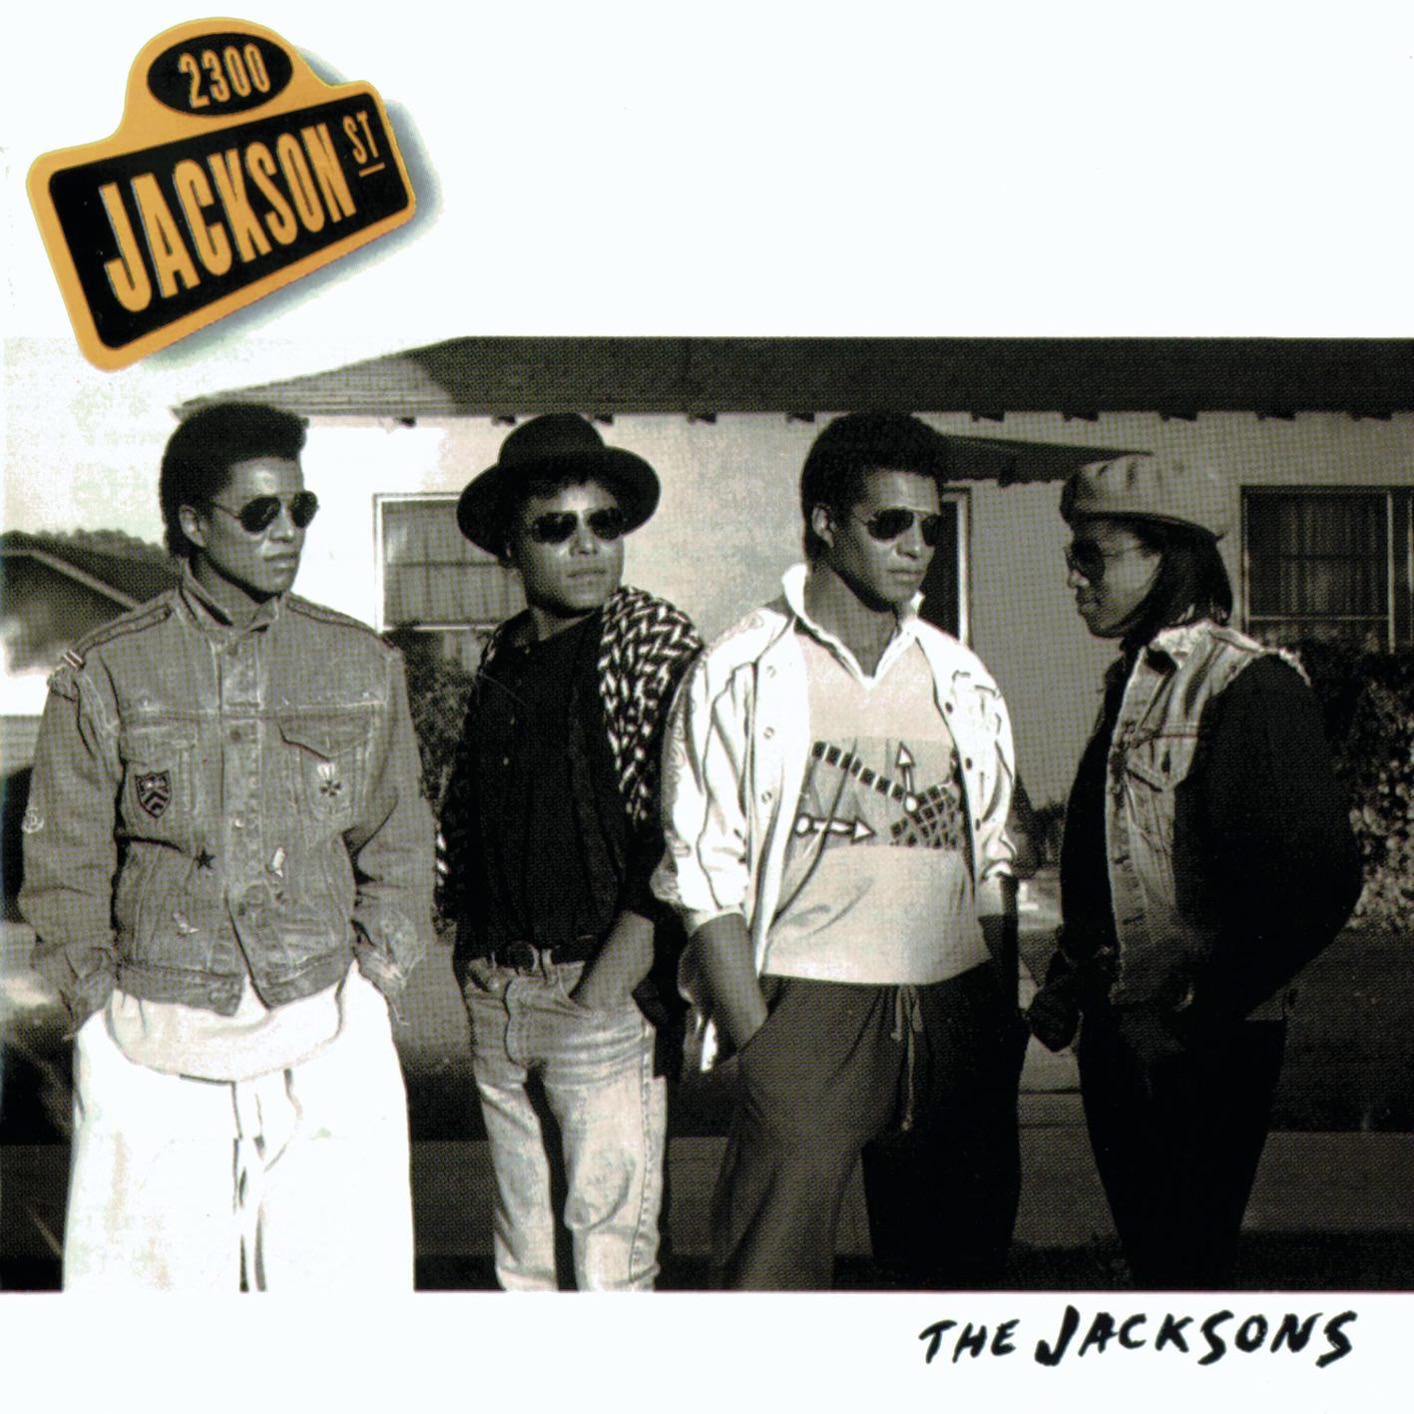 The Jacksons - 2300 Jackson Street (1989/2016) [HDTracks FLAC 24bit/96kHz]